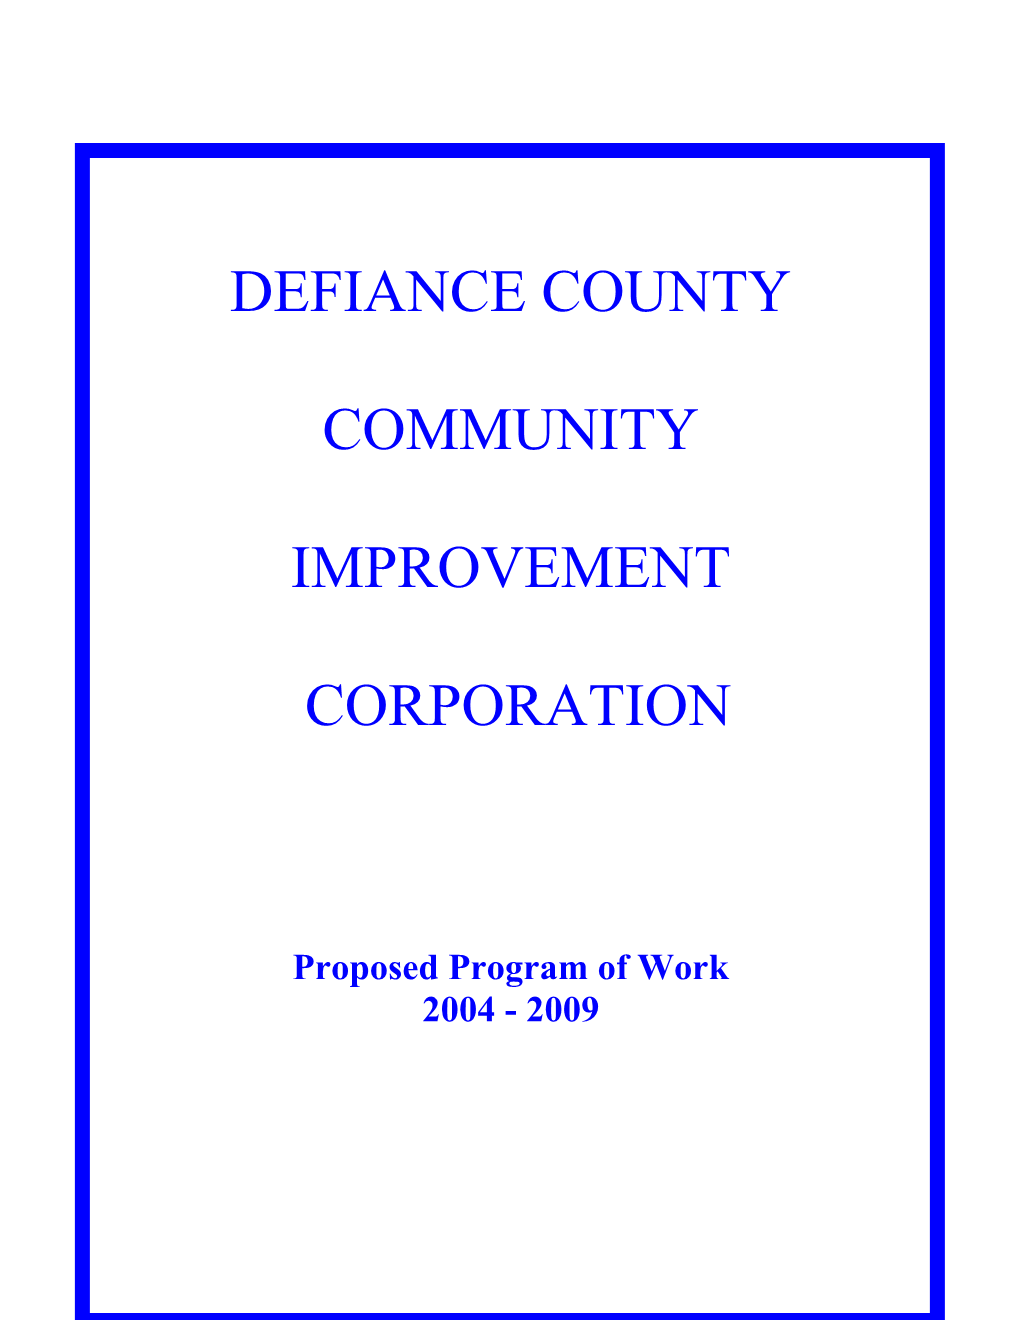 Proposed Program of Work